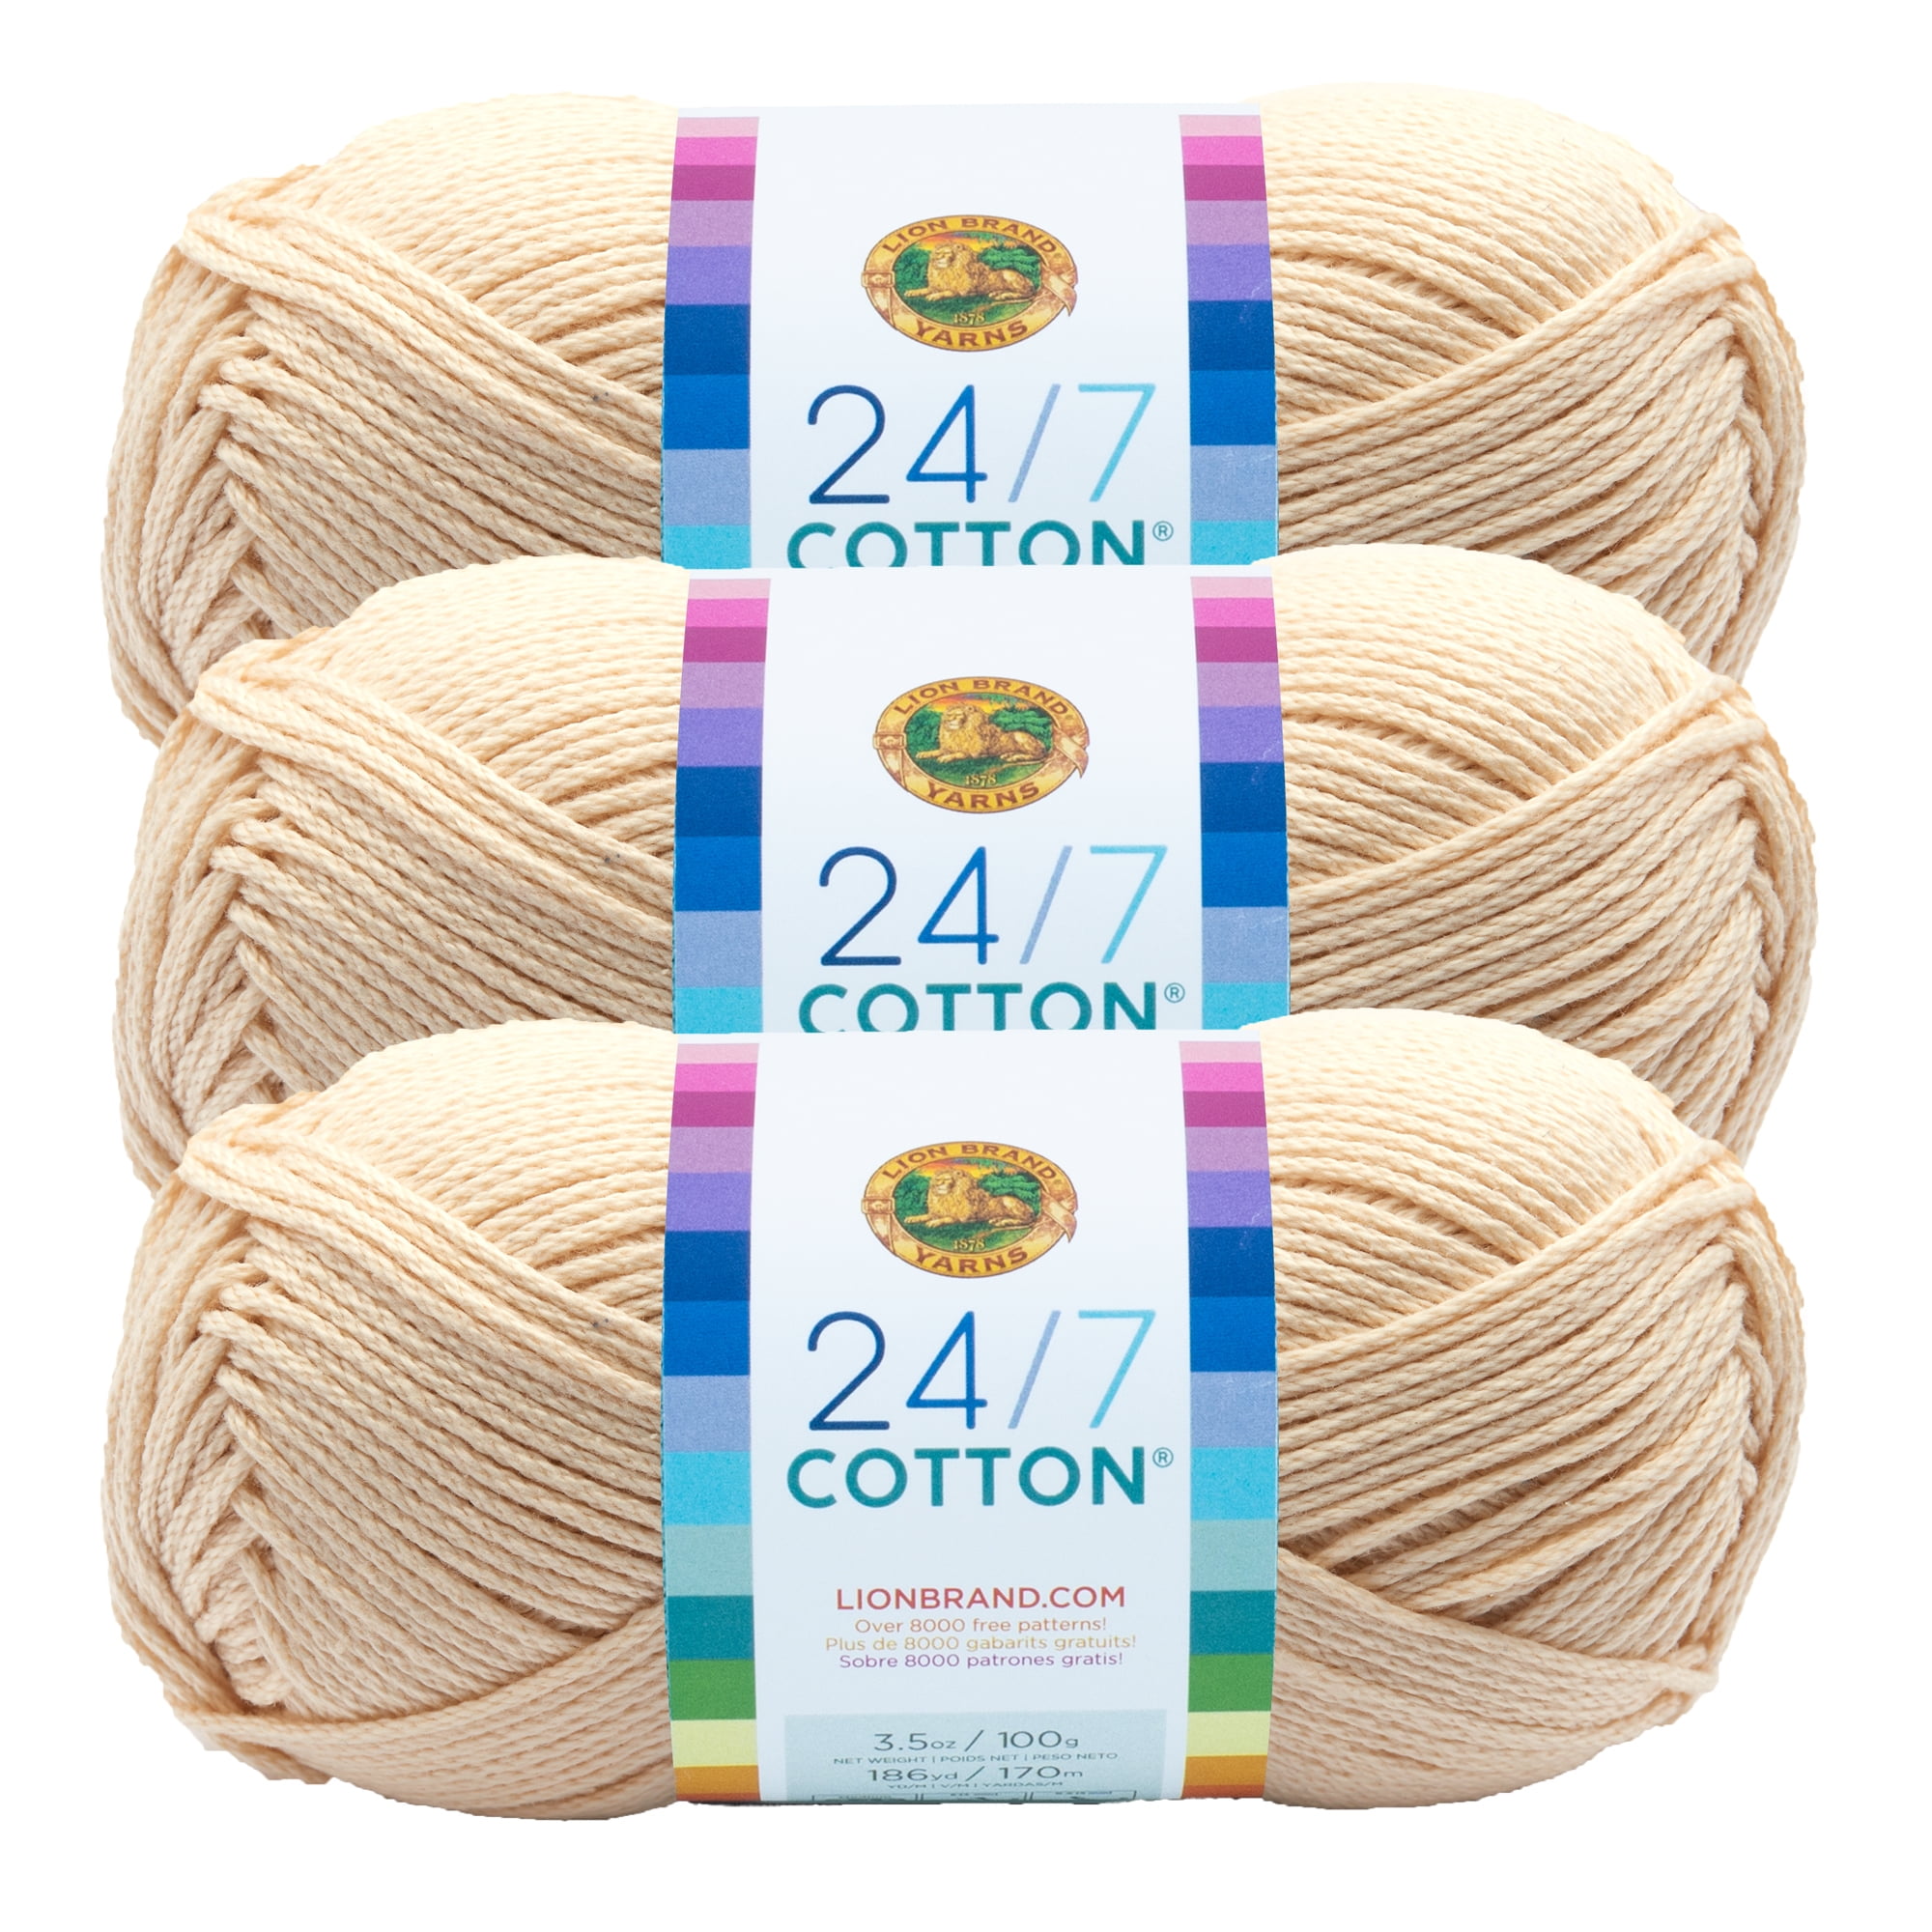 Lion Brand 24/7 Cotton Yarn, Yarn for Knitting, Crocheting, and Crafts,  Aqua, 3 Pack